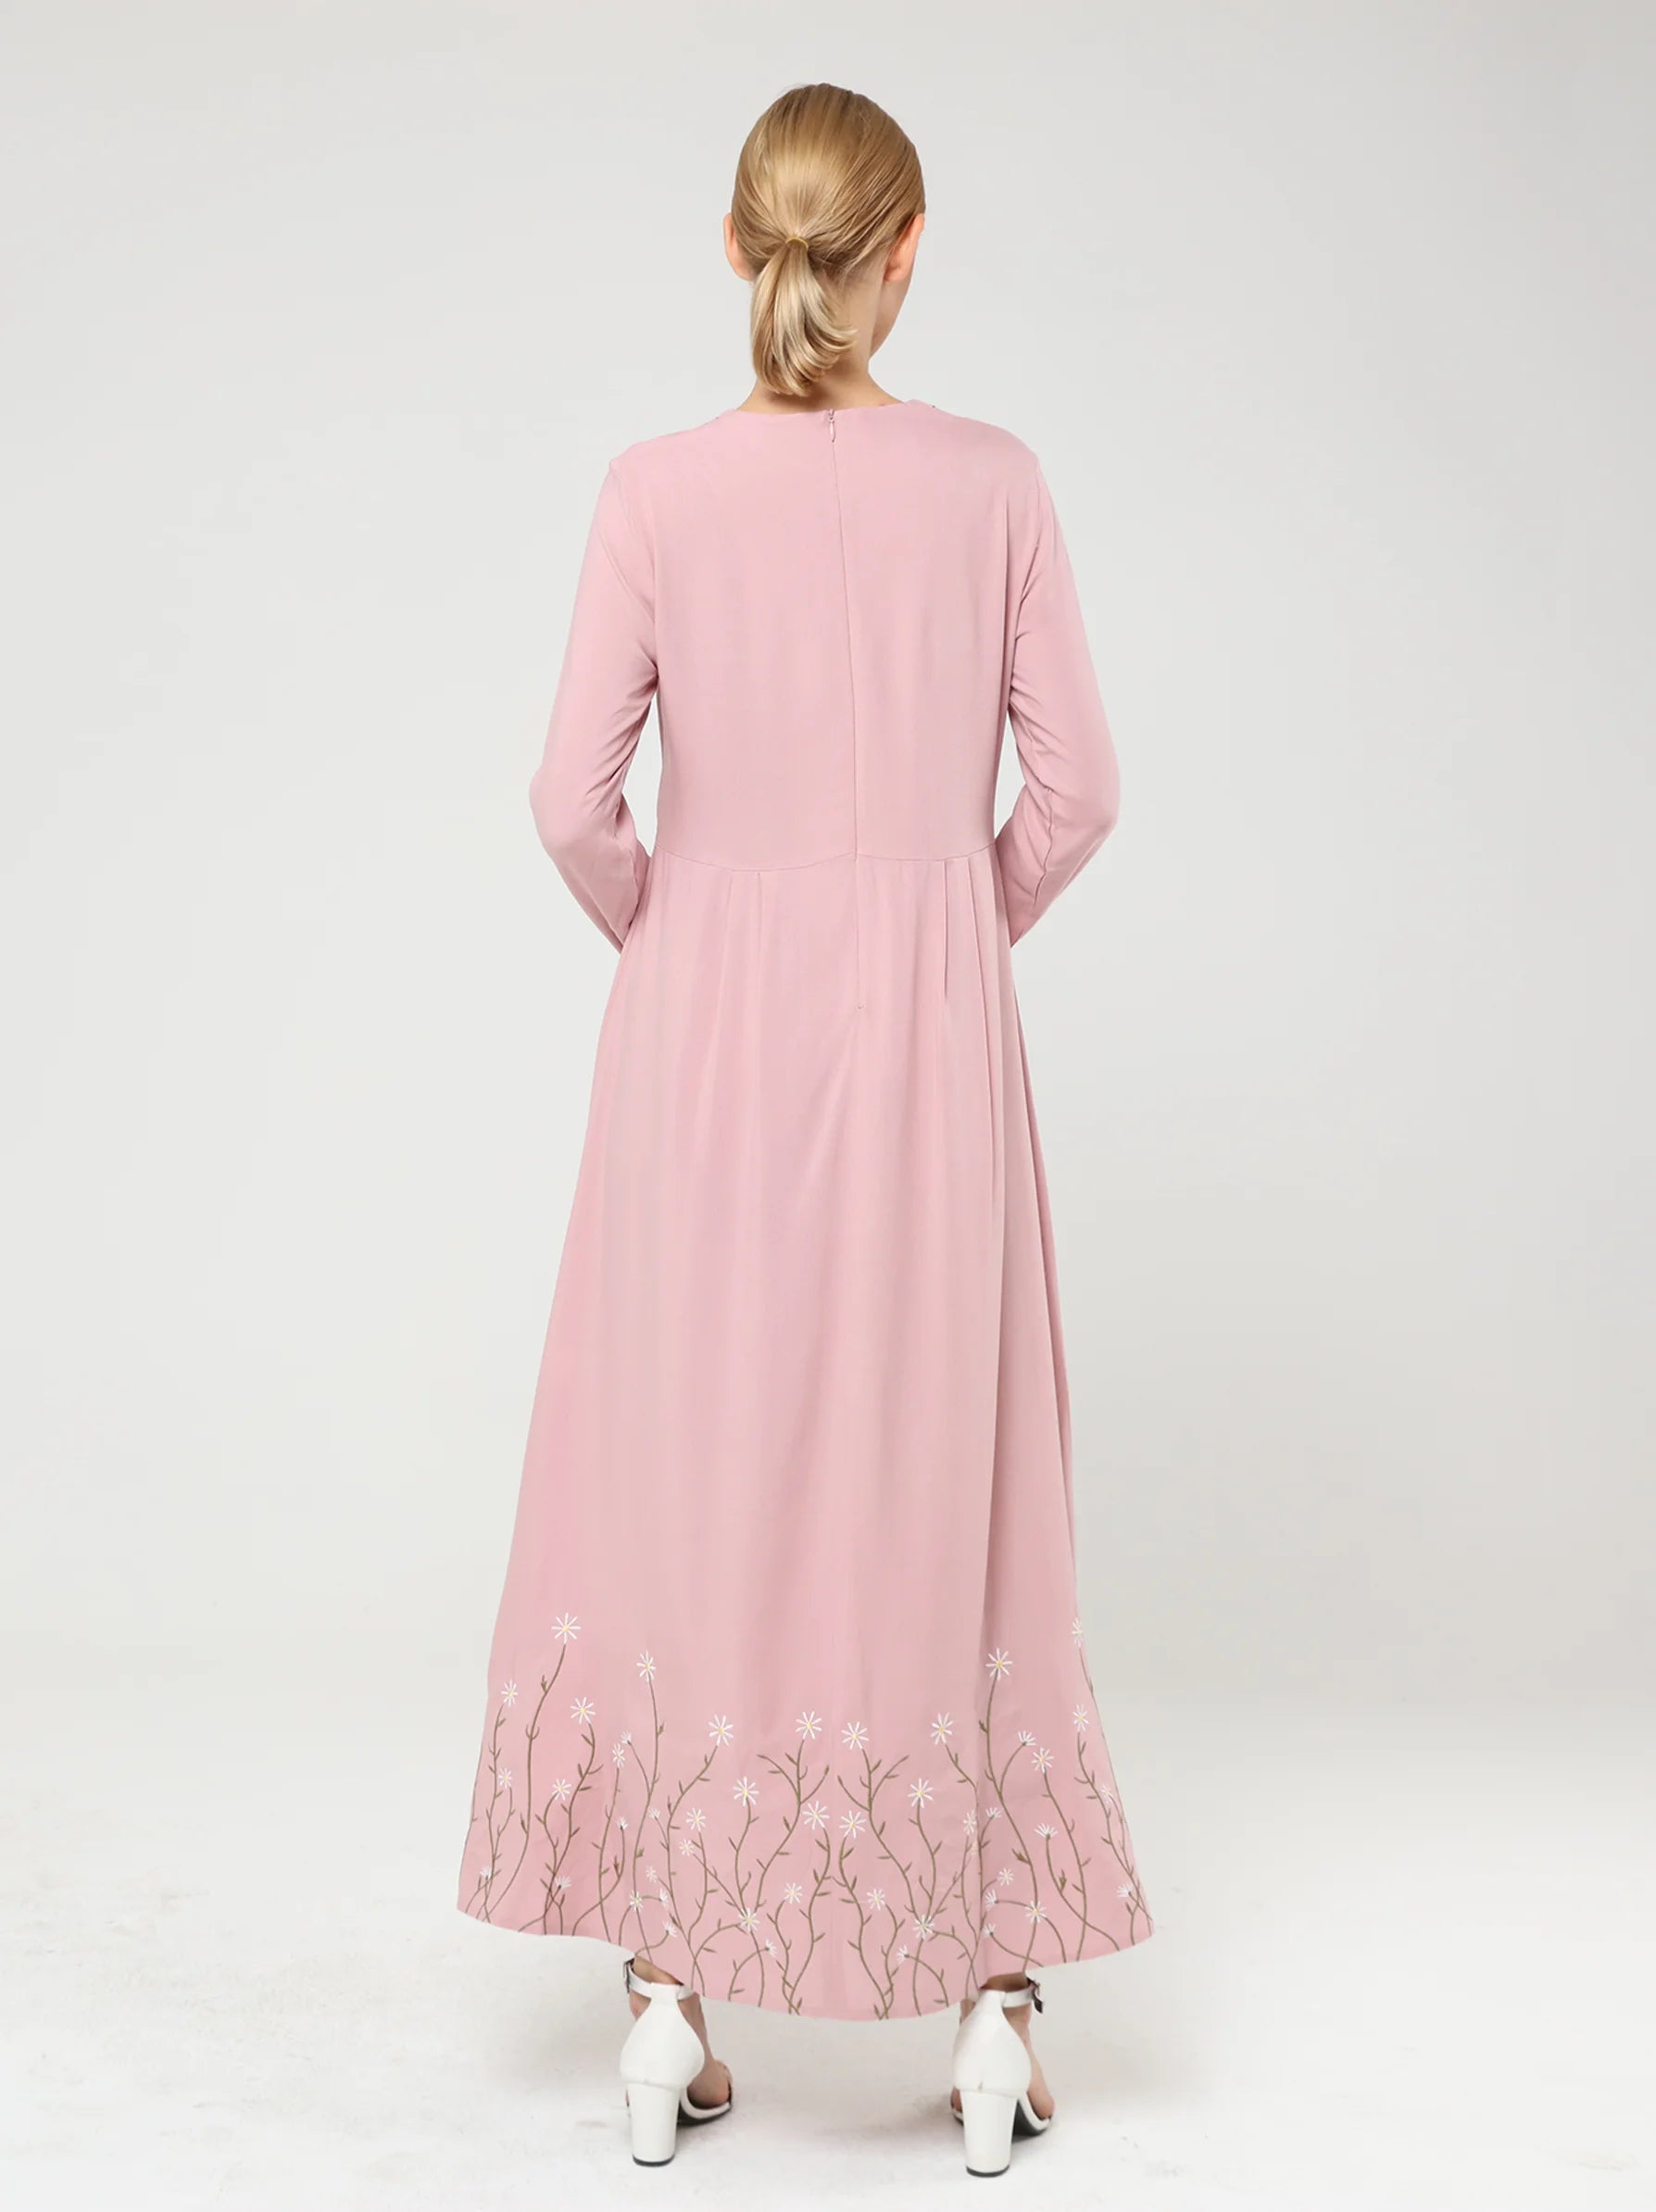 pink embroidered dress modora